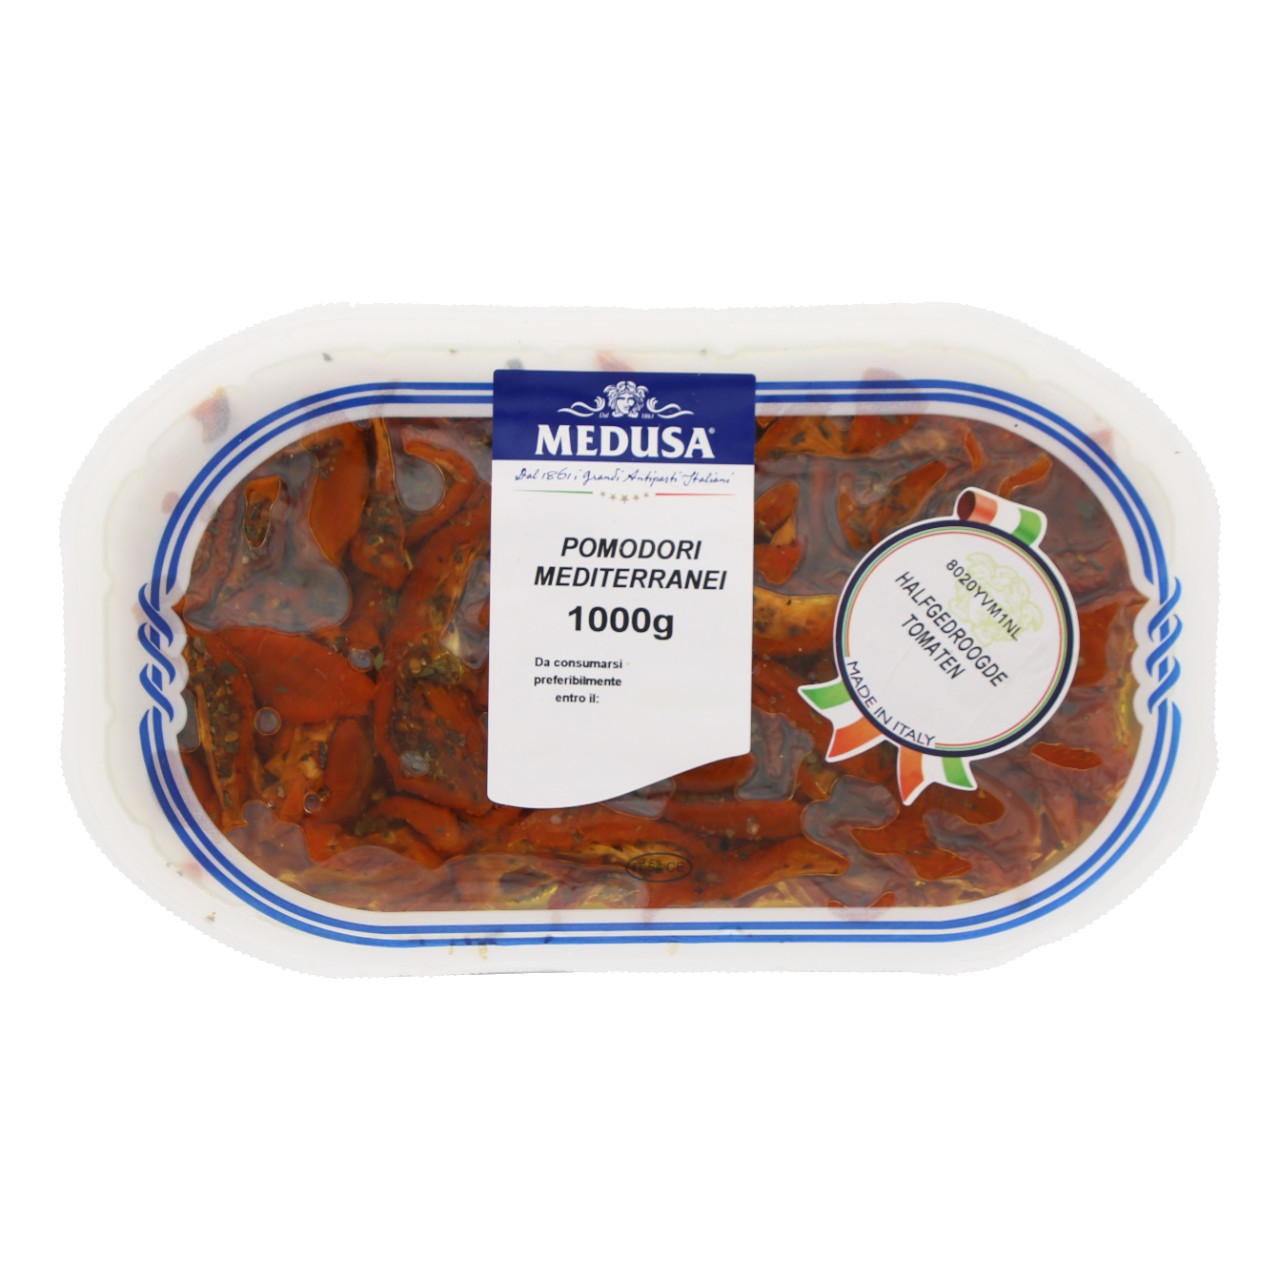 Halfgedroogde tomaten mediterranei, in kruidenolie